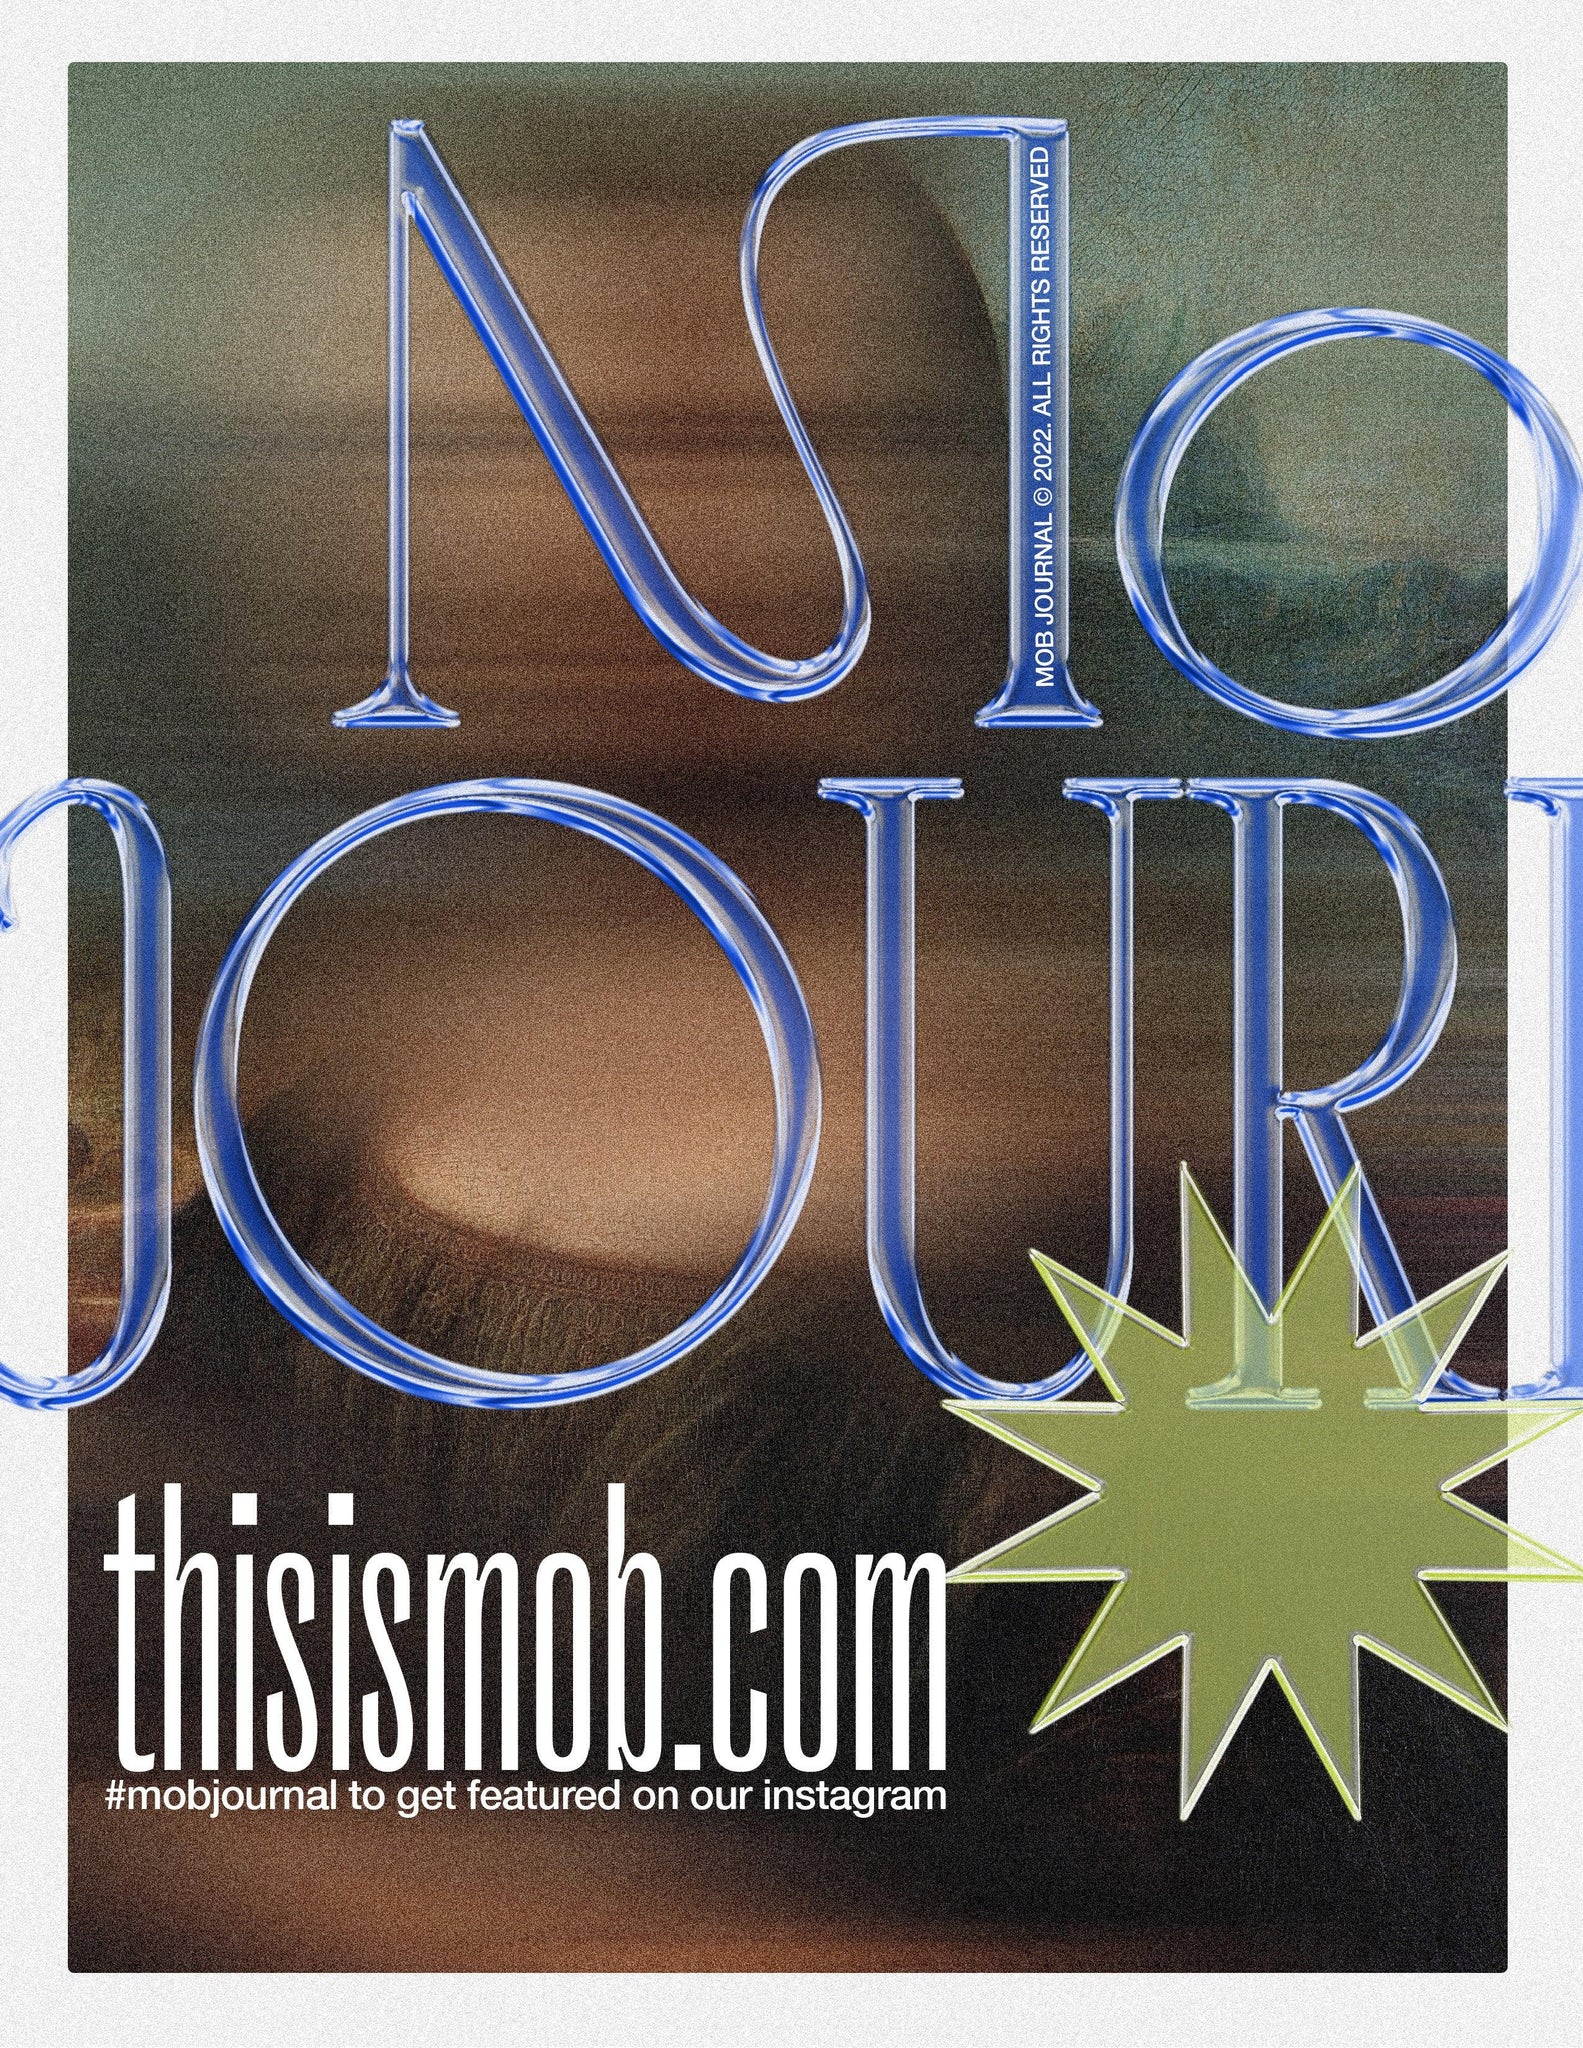 MOB JOURNAL | VOLUME TWENTY SIX | ISSUE #40 - Mob Journal